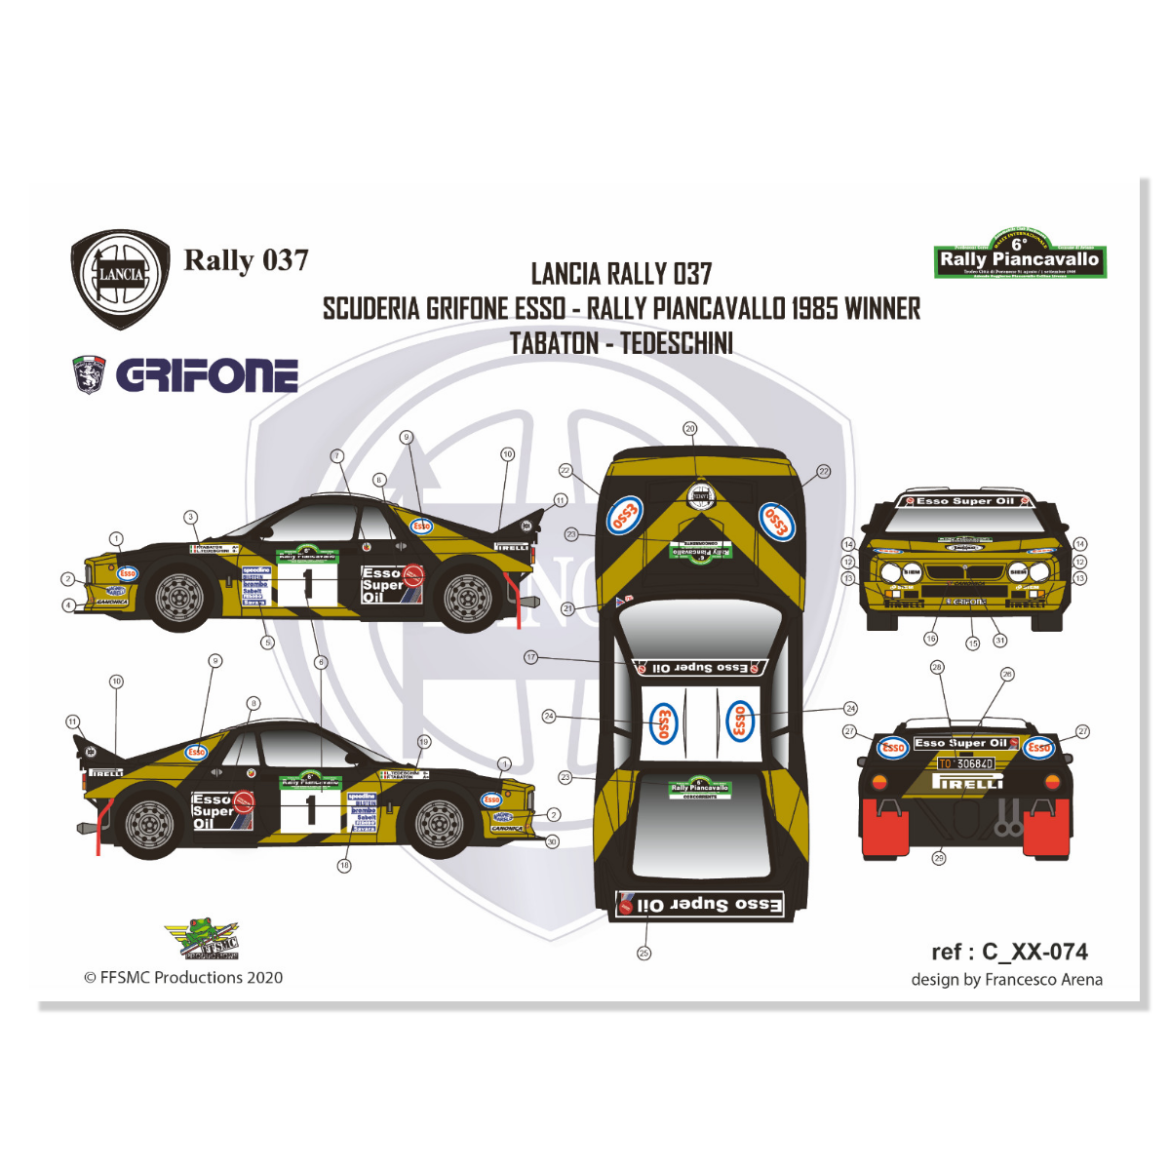 Lancia-Rally-037-Grifone-Piancavallo-85.png